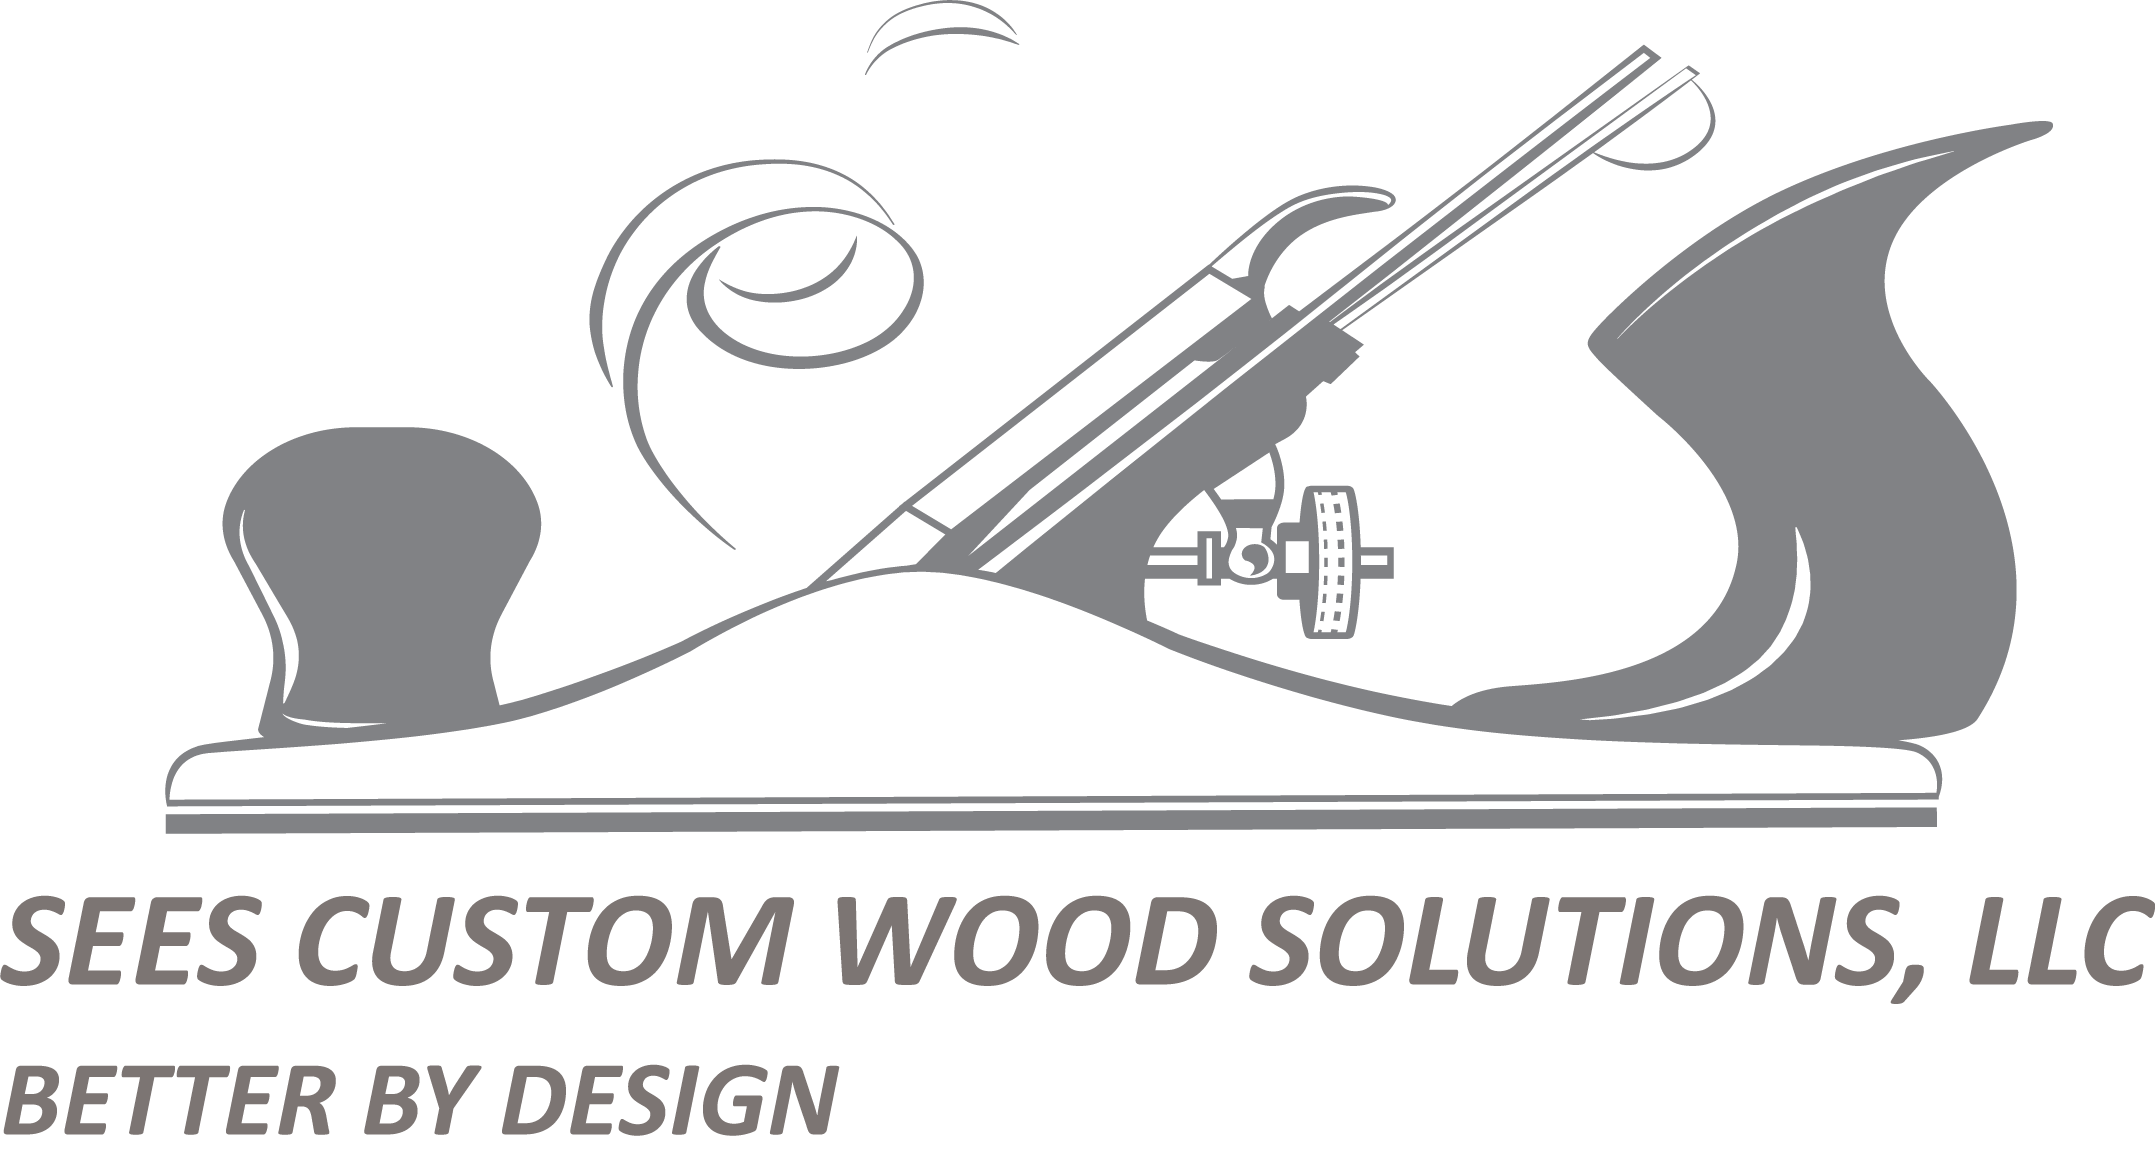 sees custom wood solutions logo